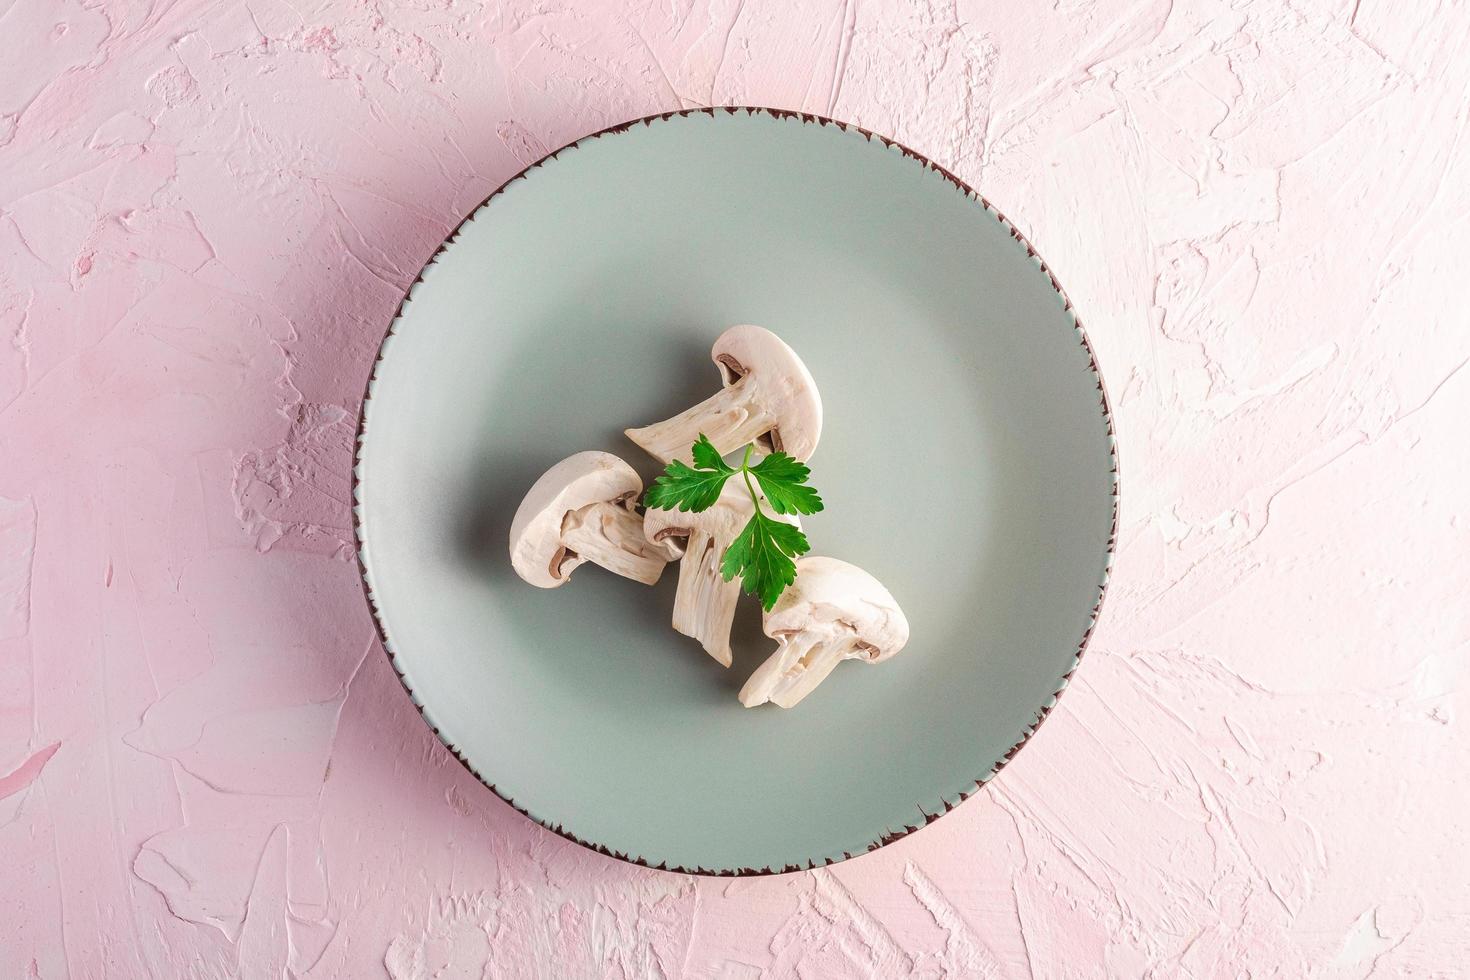 Four mushrooms on grey plate  photo